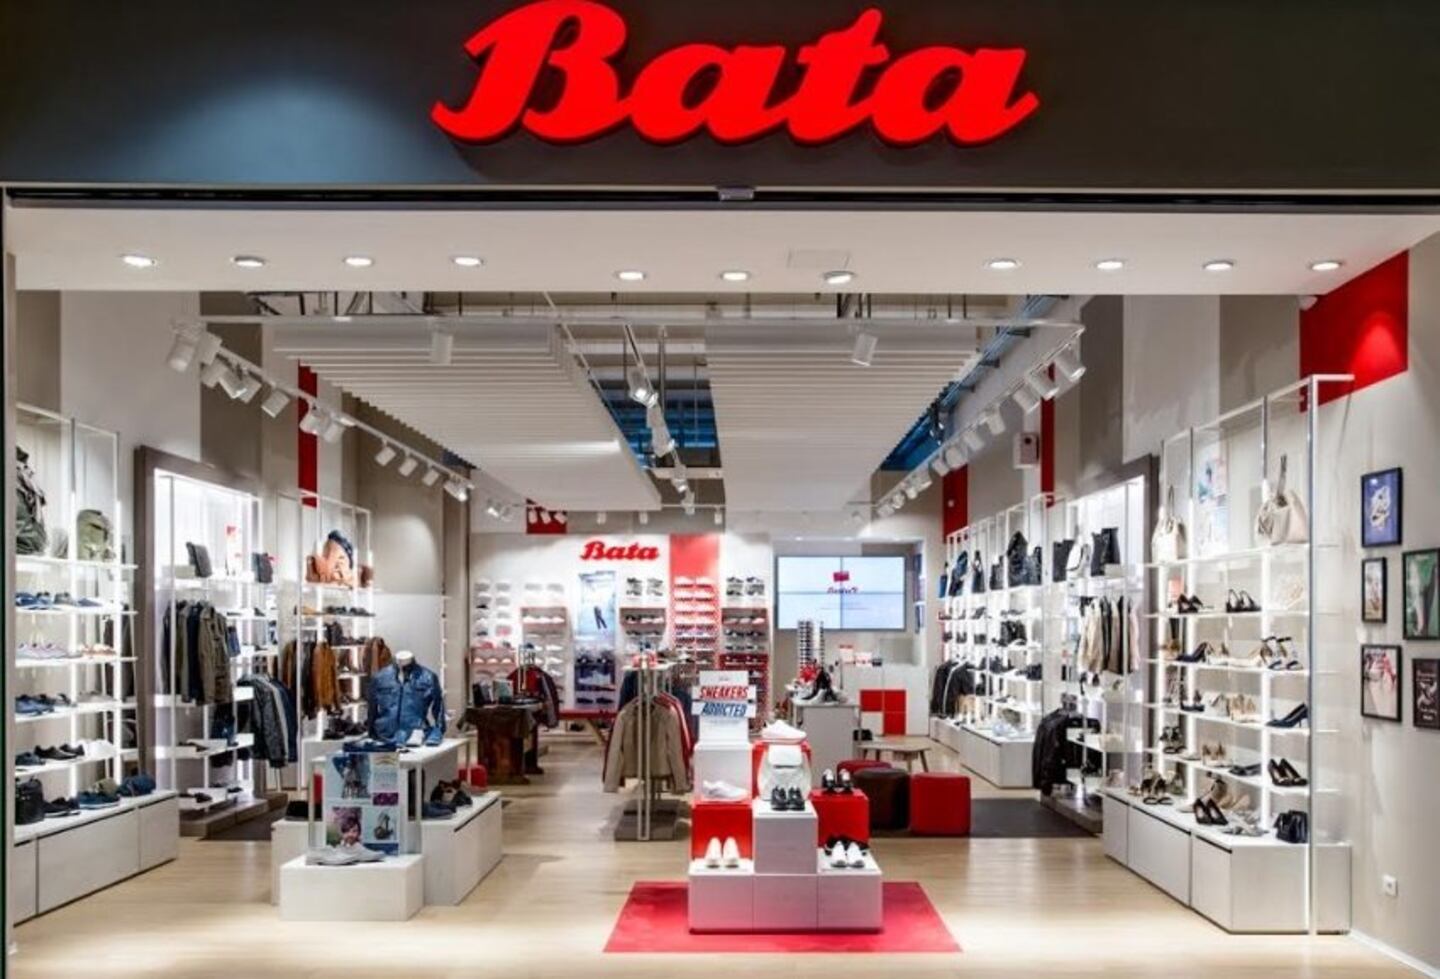 A Bata India store